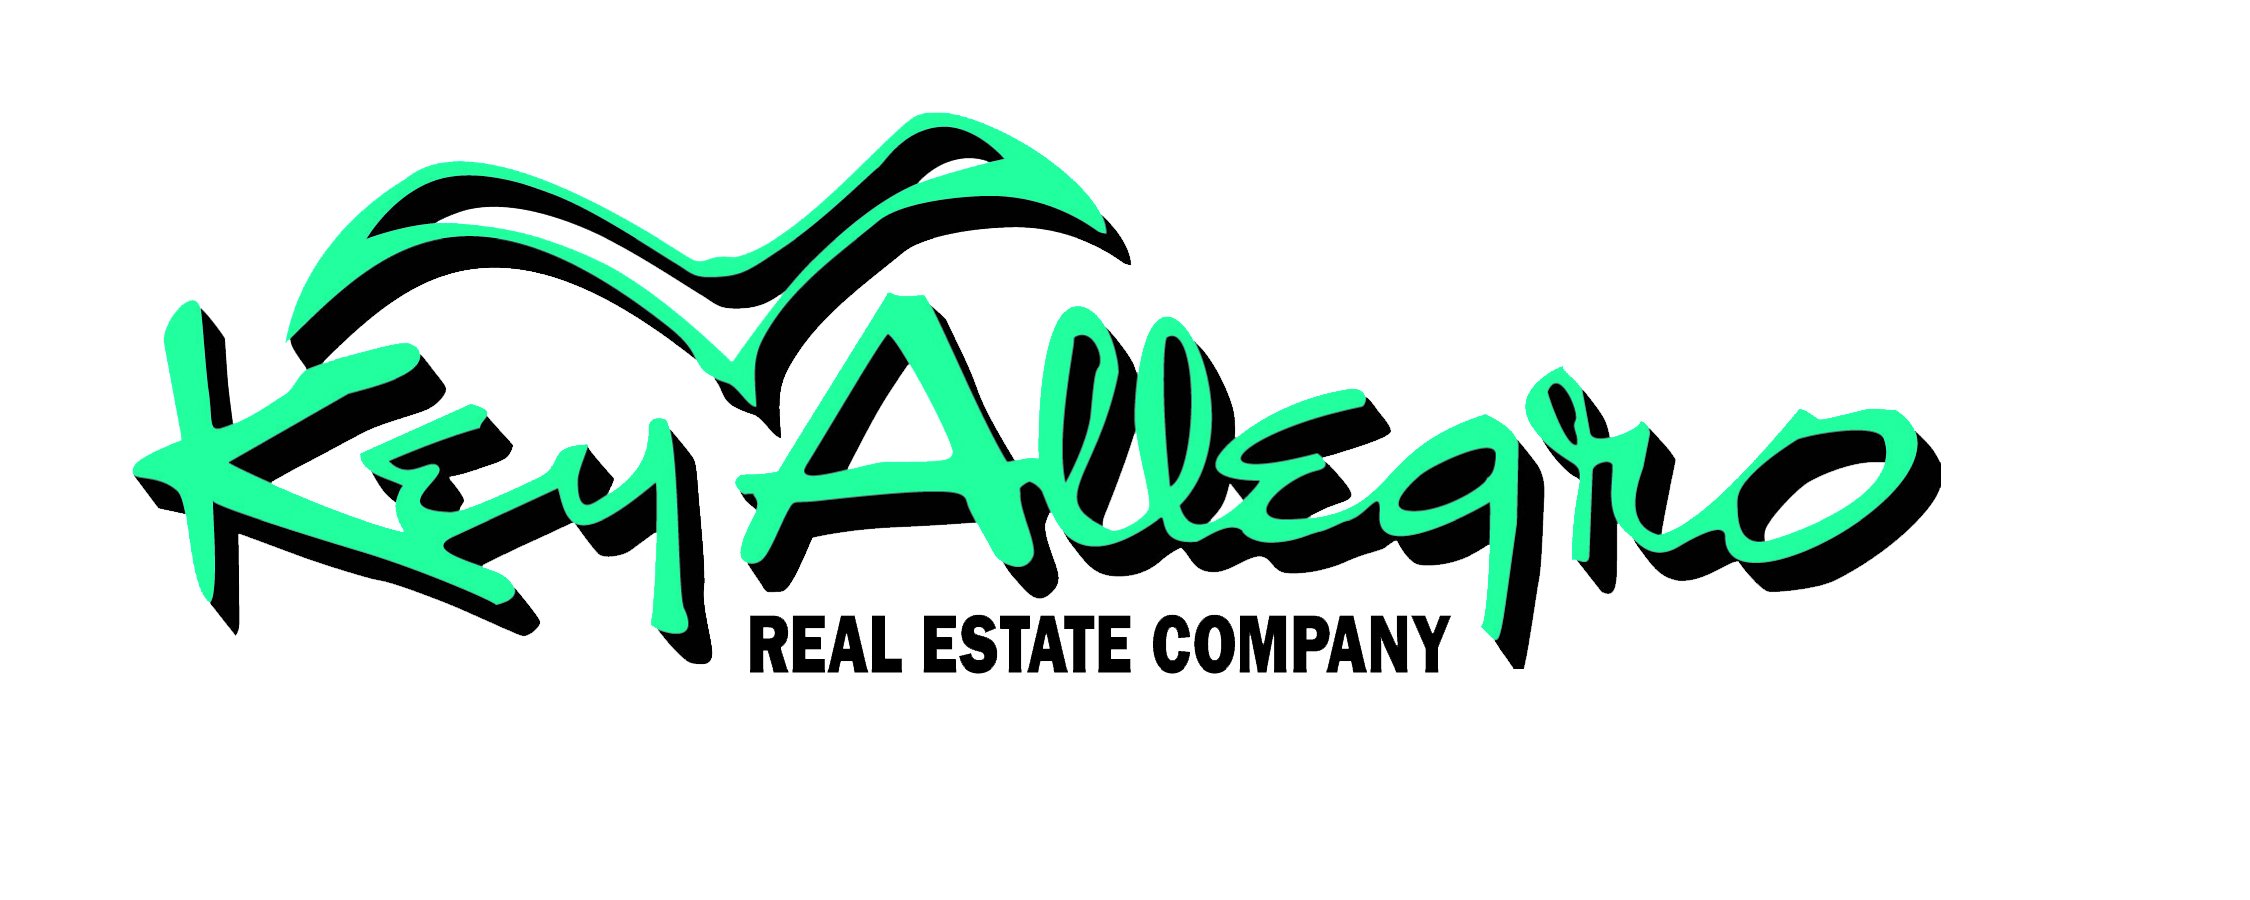 Key Allegro Real Estate